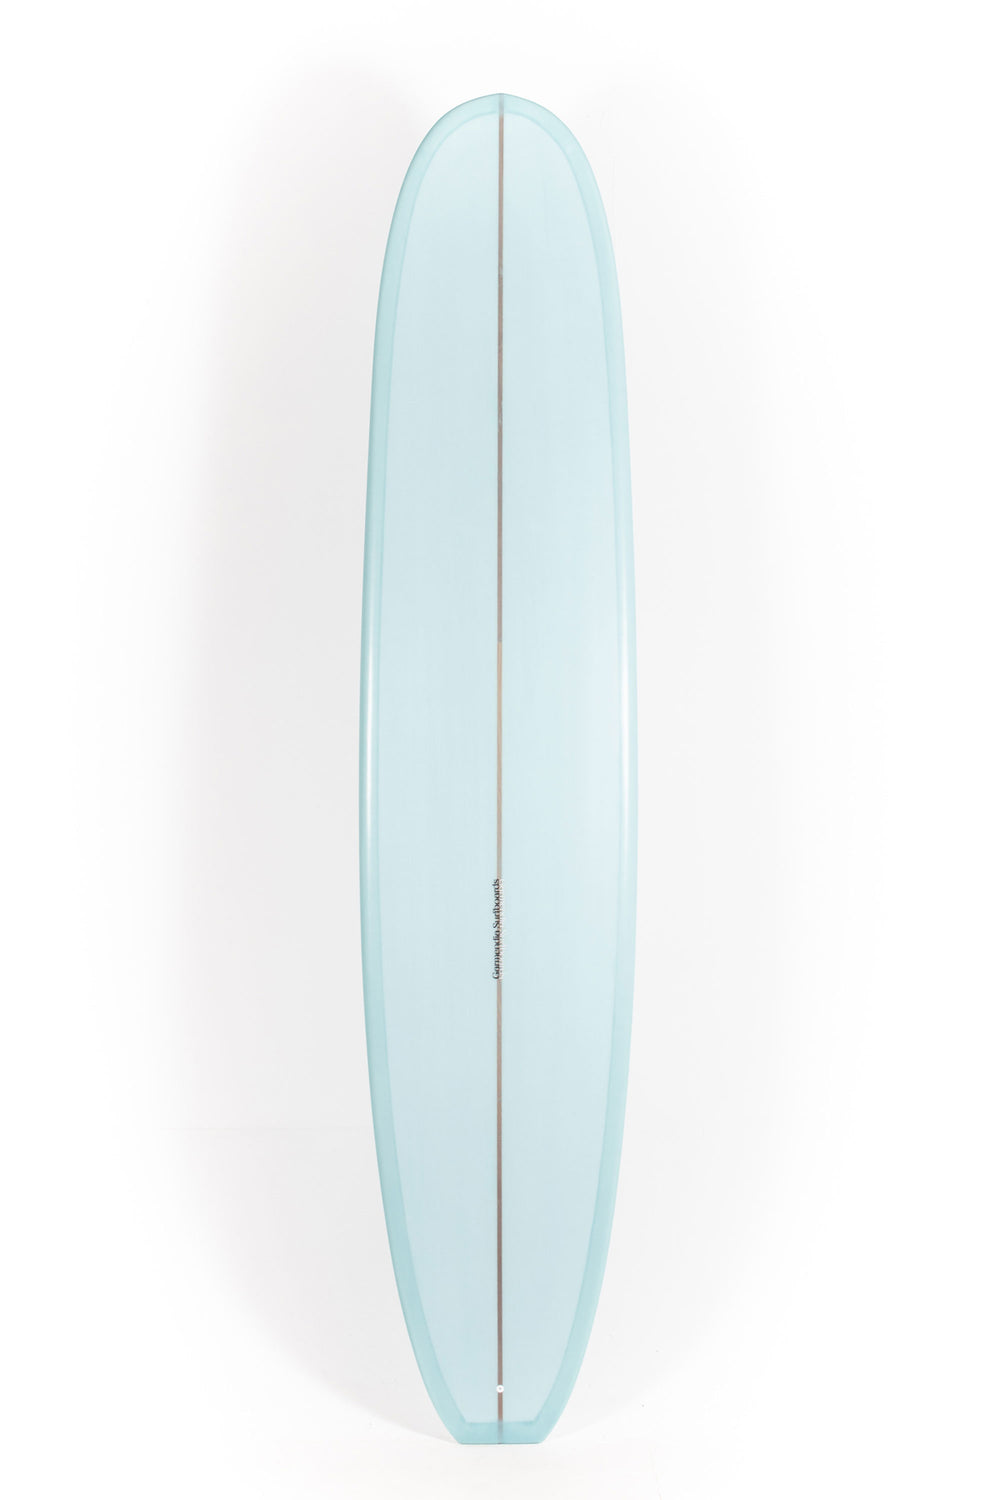 Pukas Surf Shop - Garmendia Surfboards - NOSERIDER - 9'2